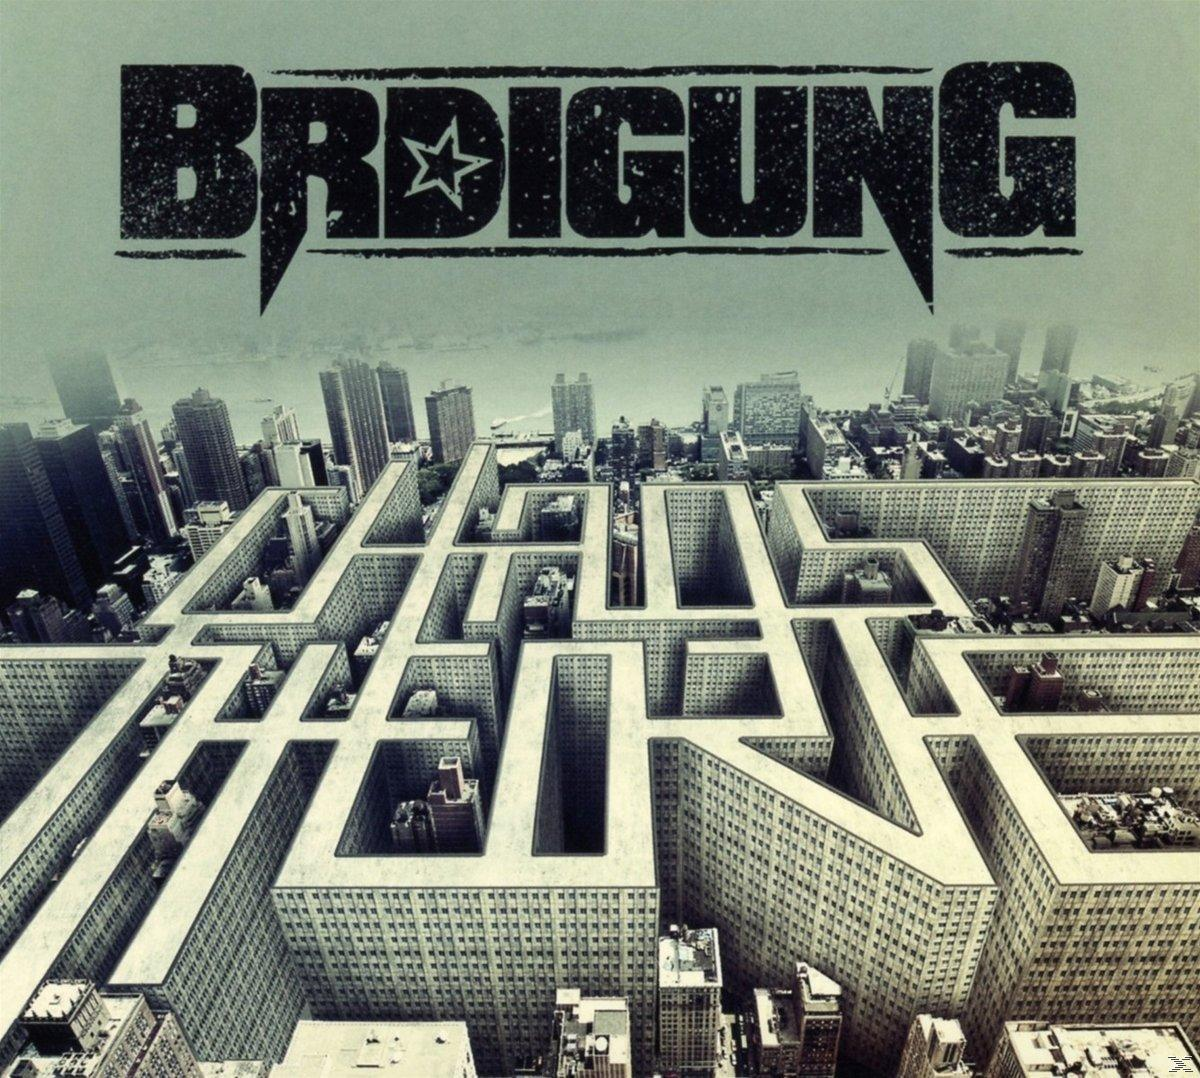 BRDigung - Chaostheorie (CD) (Digipak) 